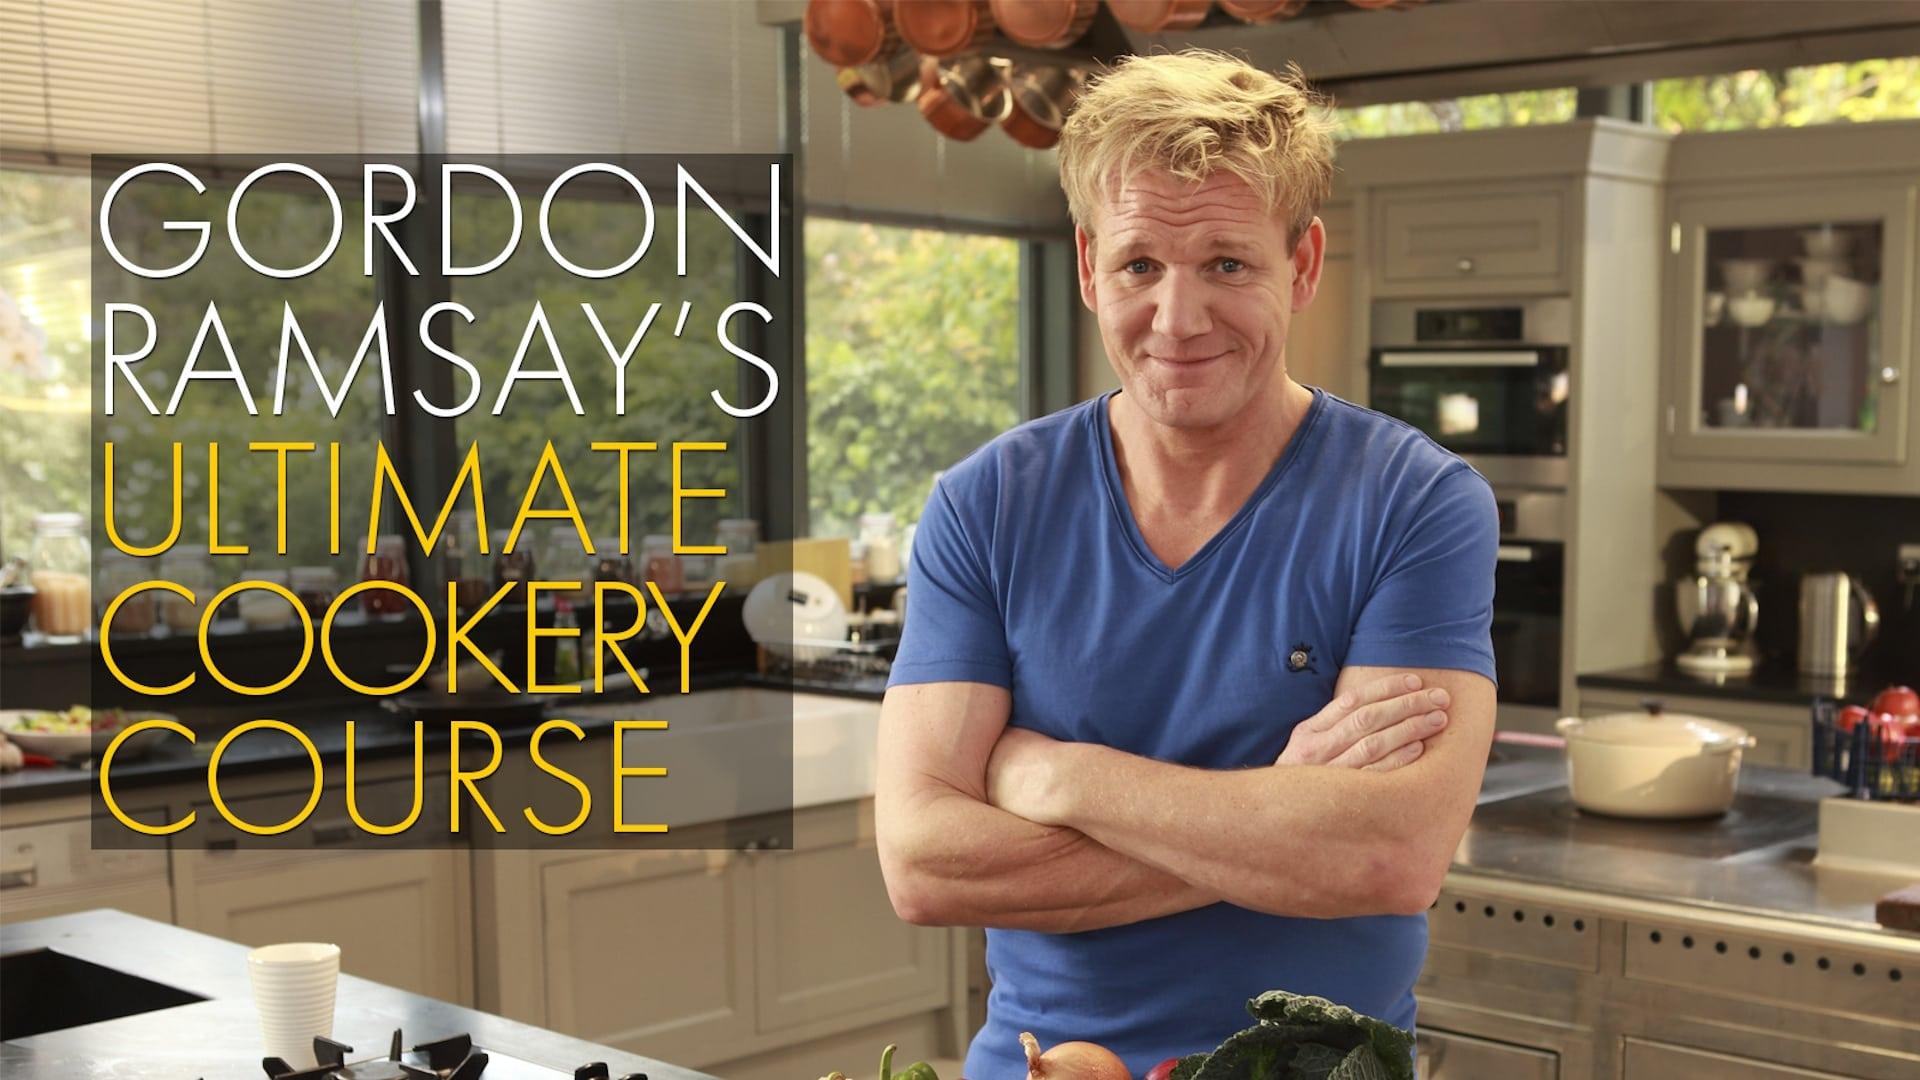 Gordon Ramsay's Ultimate Cookery Course backdrop